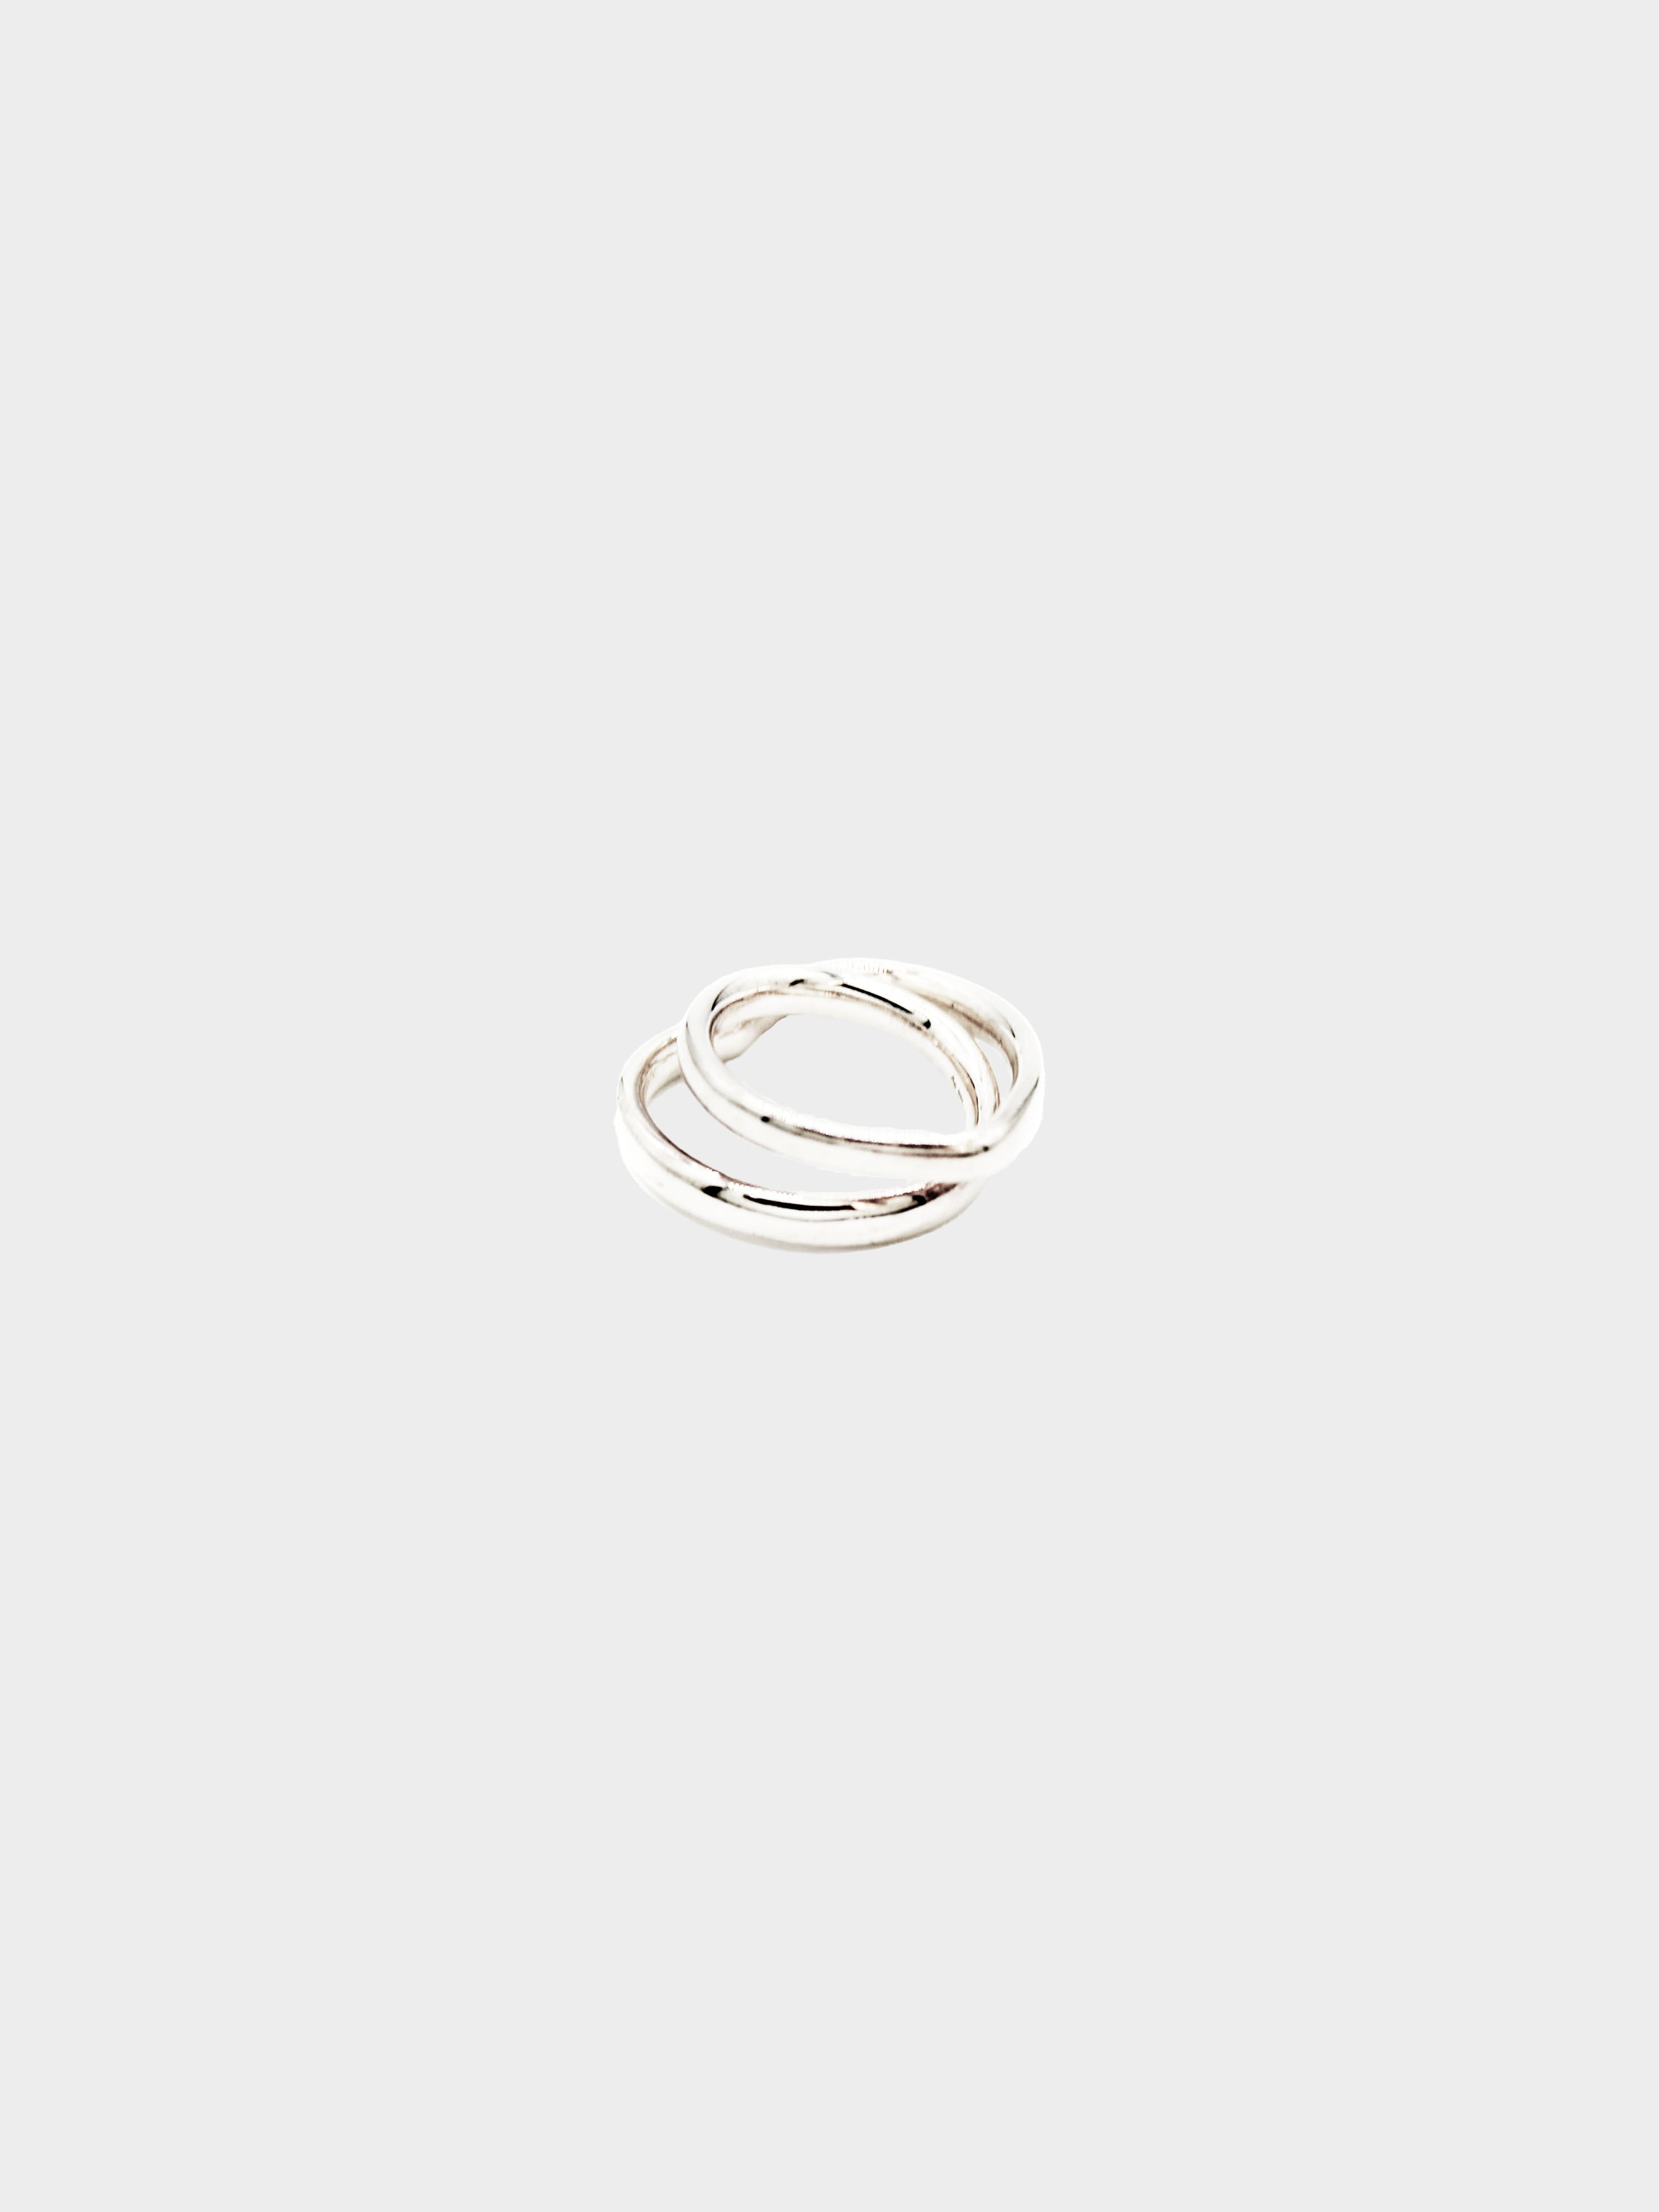 Hermès 2015 Vertige Coeur Double Ring